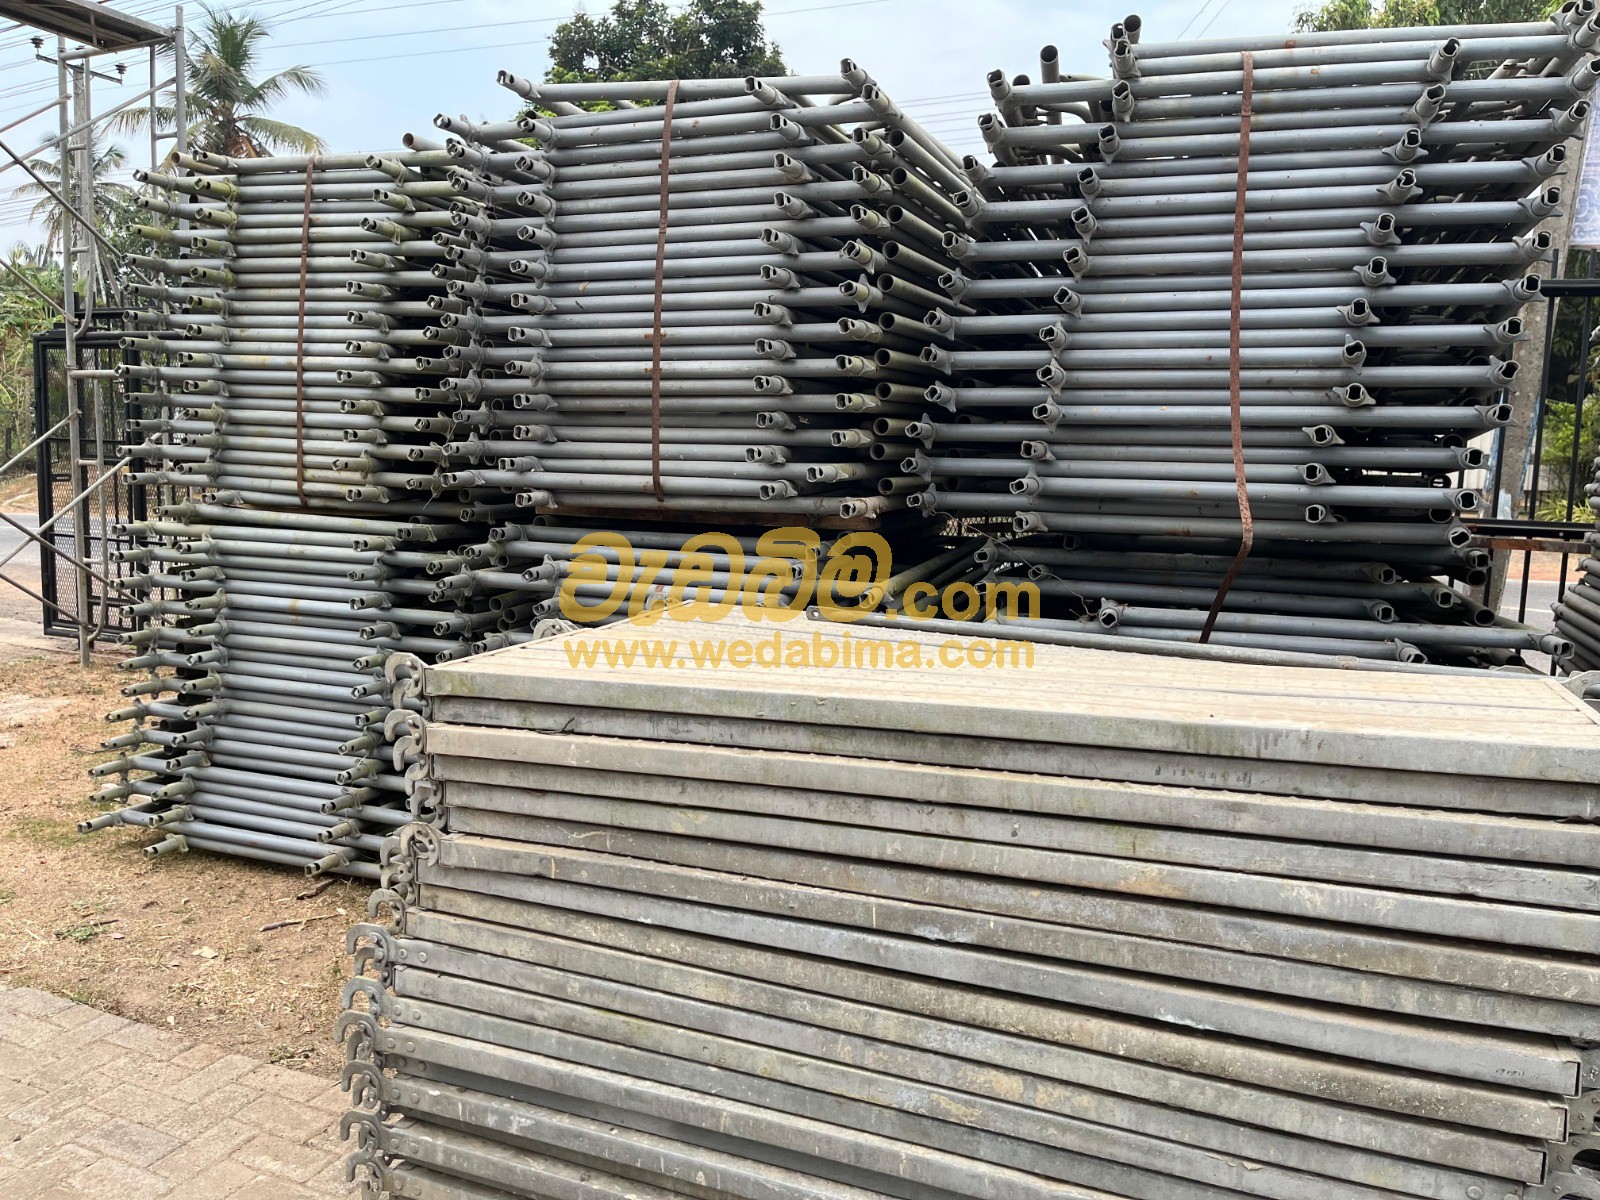 Scaffolding Sets for sale in sri lanka